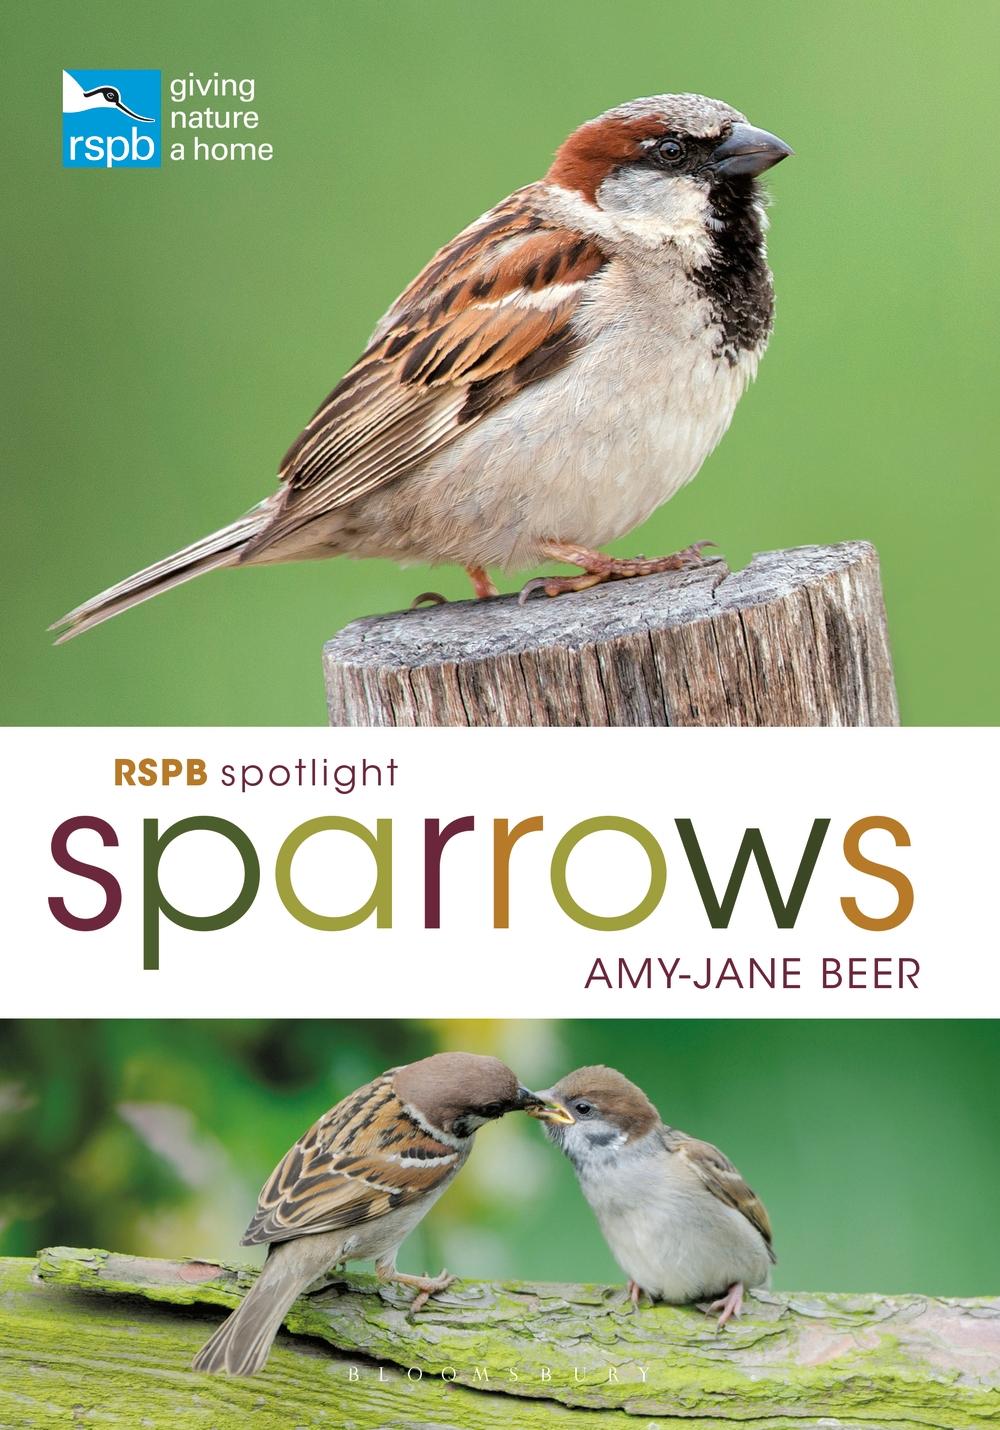 RSPB Spotlight Sparrows - Amy-Jane Beer